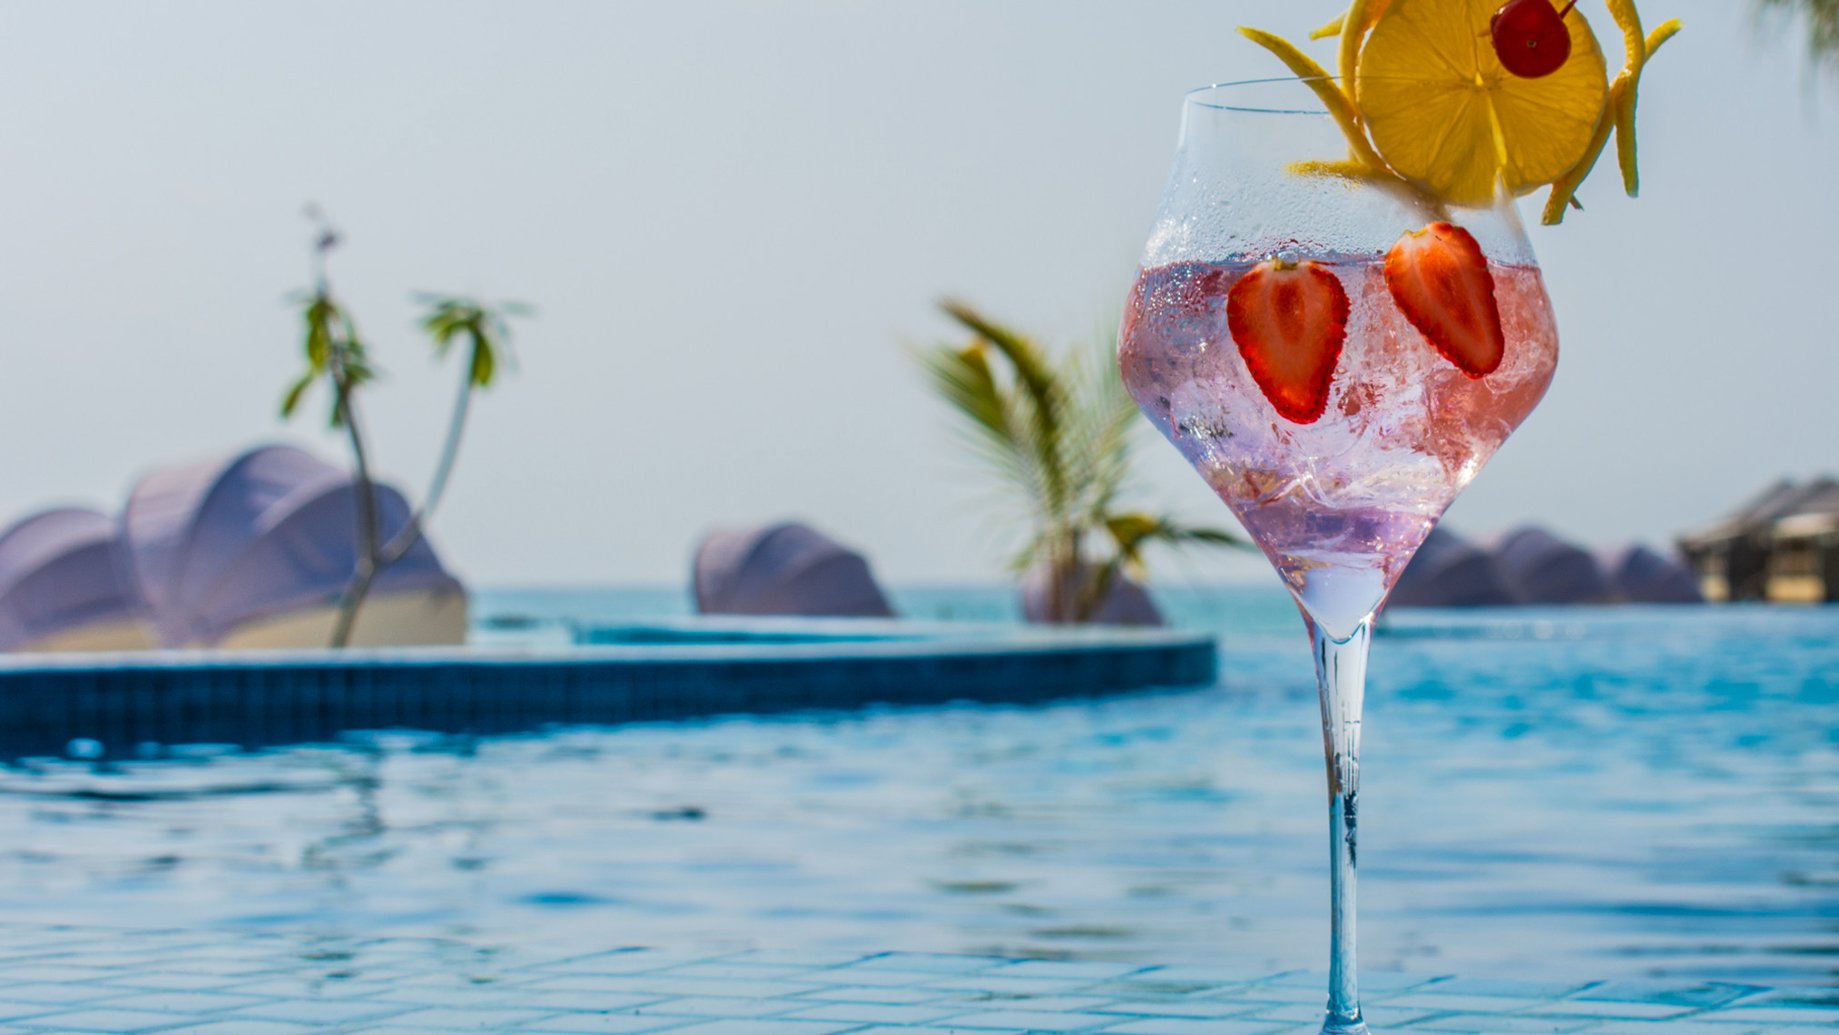 You & Me Maldives Resort - Uthurumaafaru, Raa Atoll, Maldives - Cheers Bar Poolside Cocktail